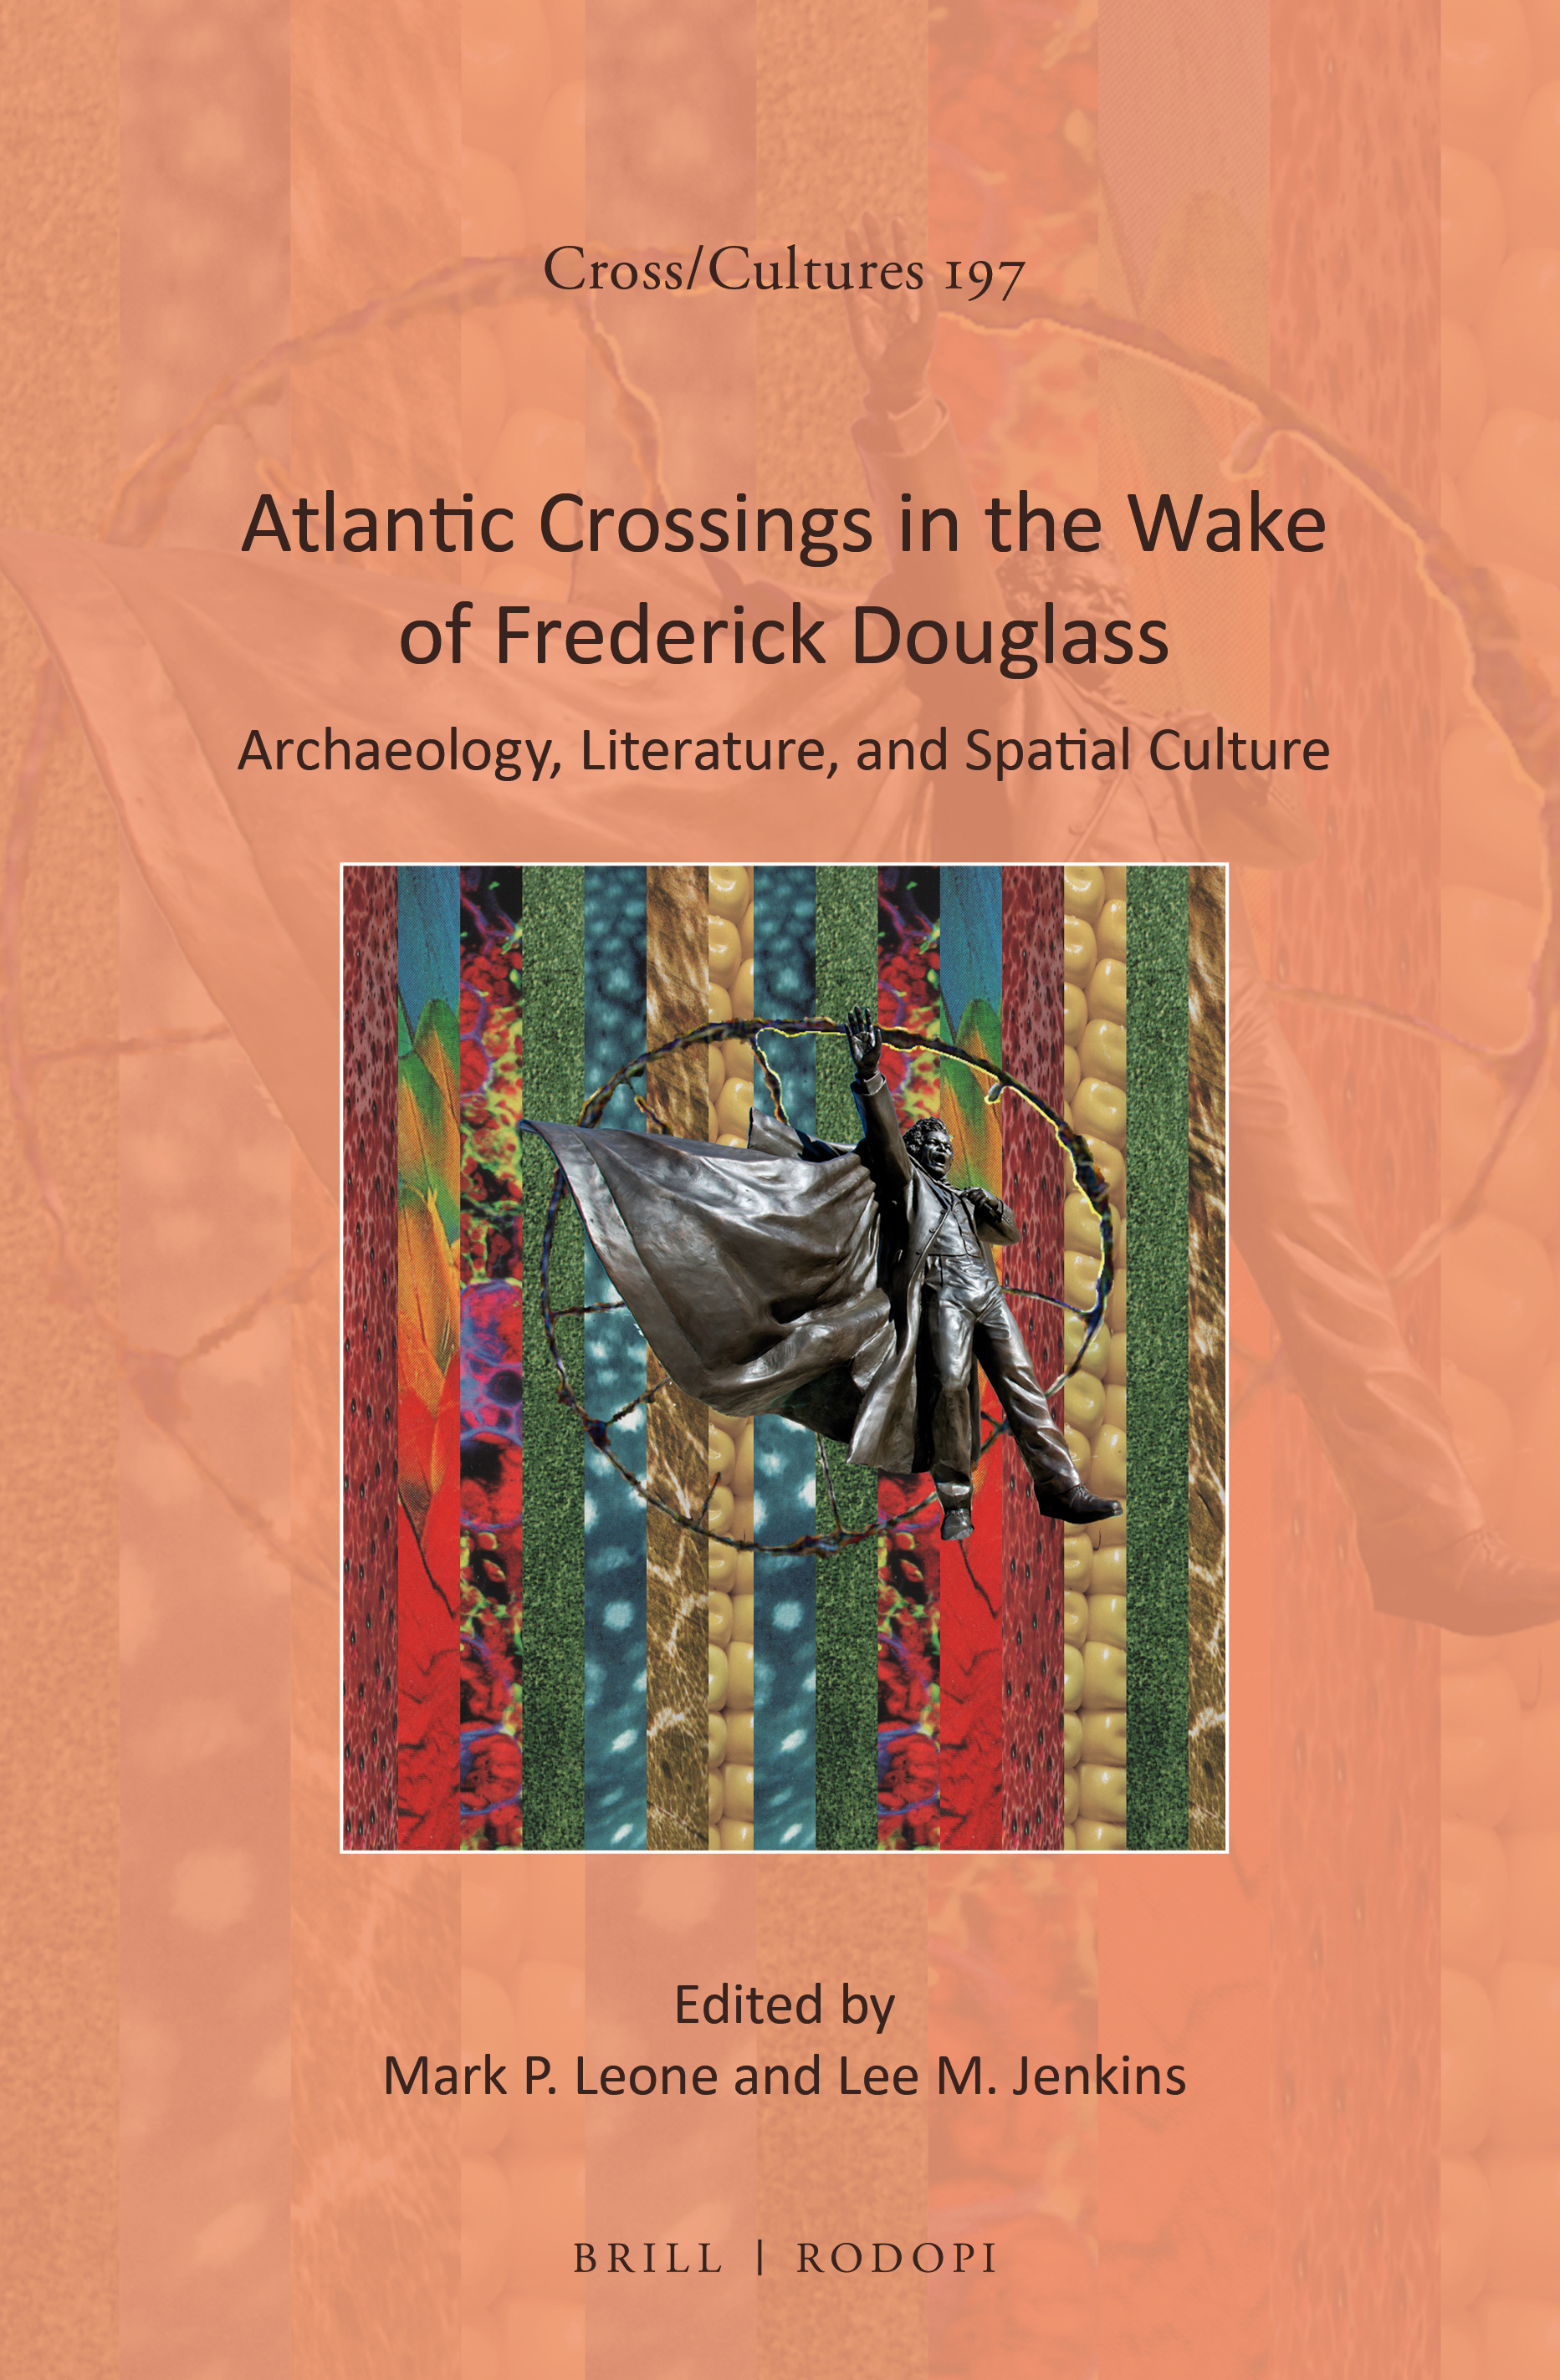 Launch of 'Atlantic Crossings in the Wake of Frederick Douglass'